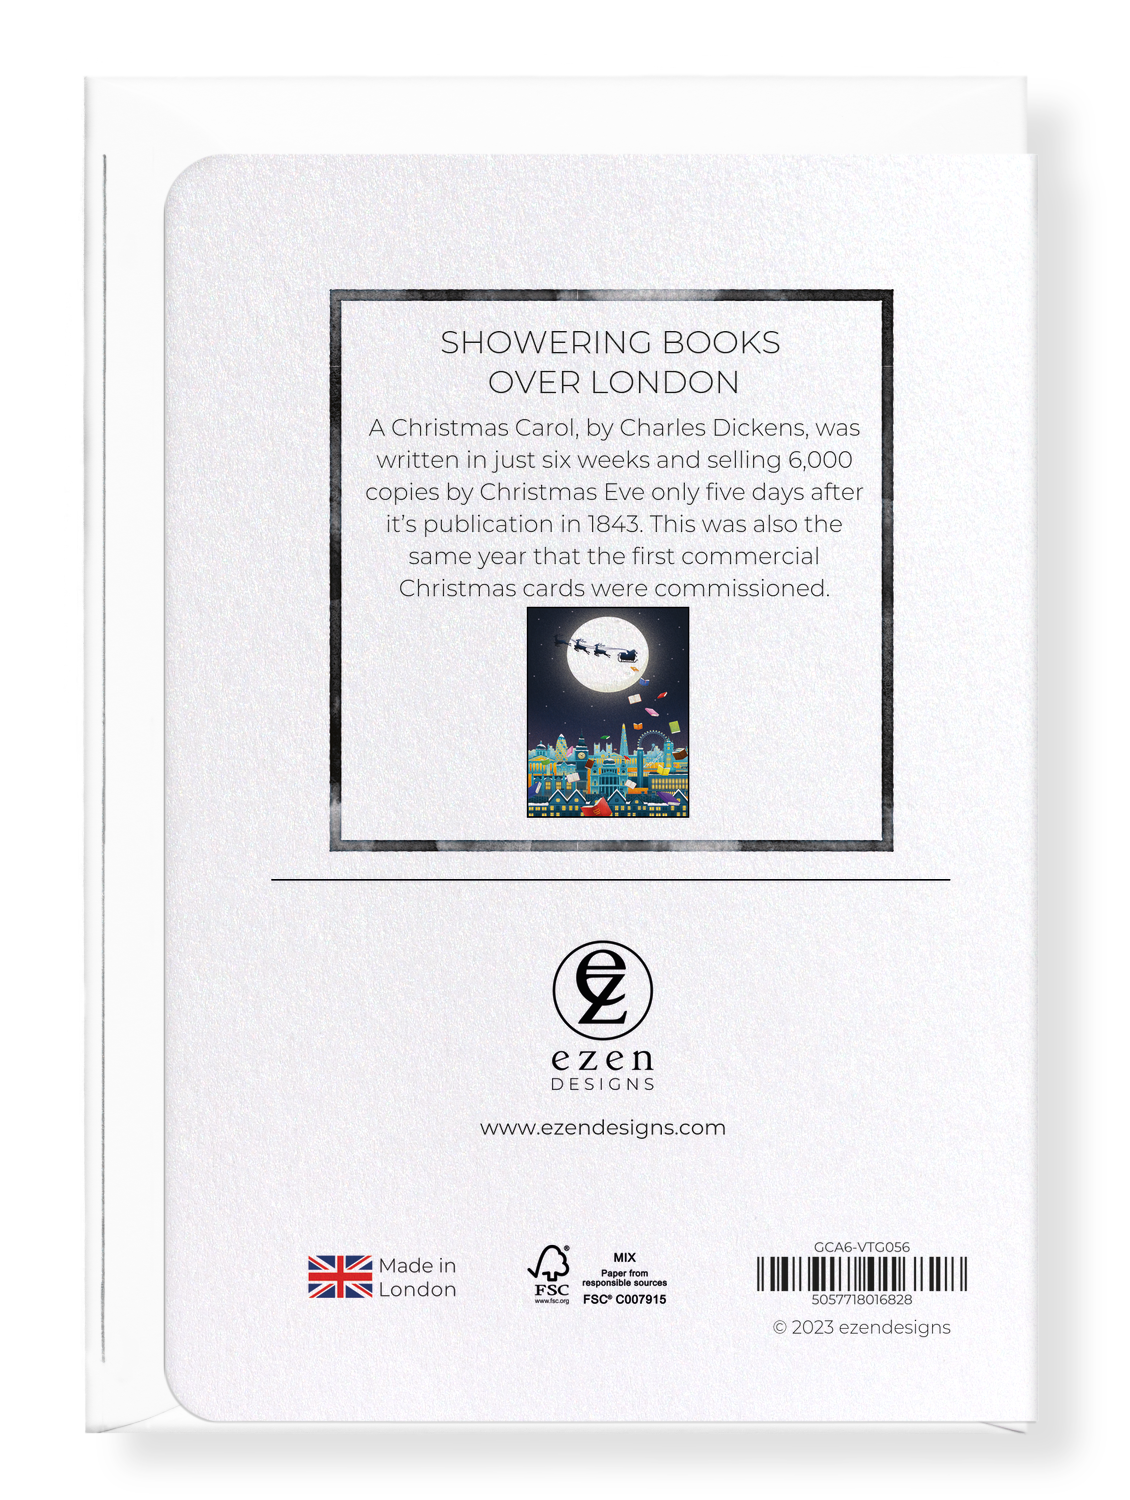 Ezen Designs - Showering books over London - Greeting Card - Back